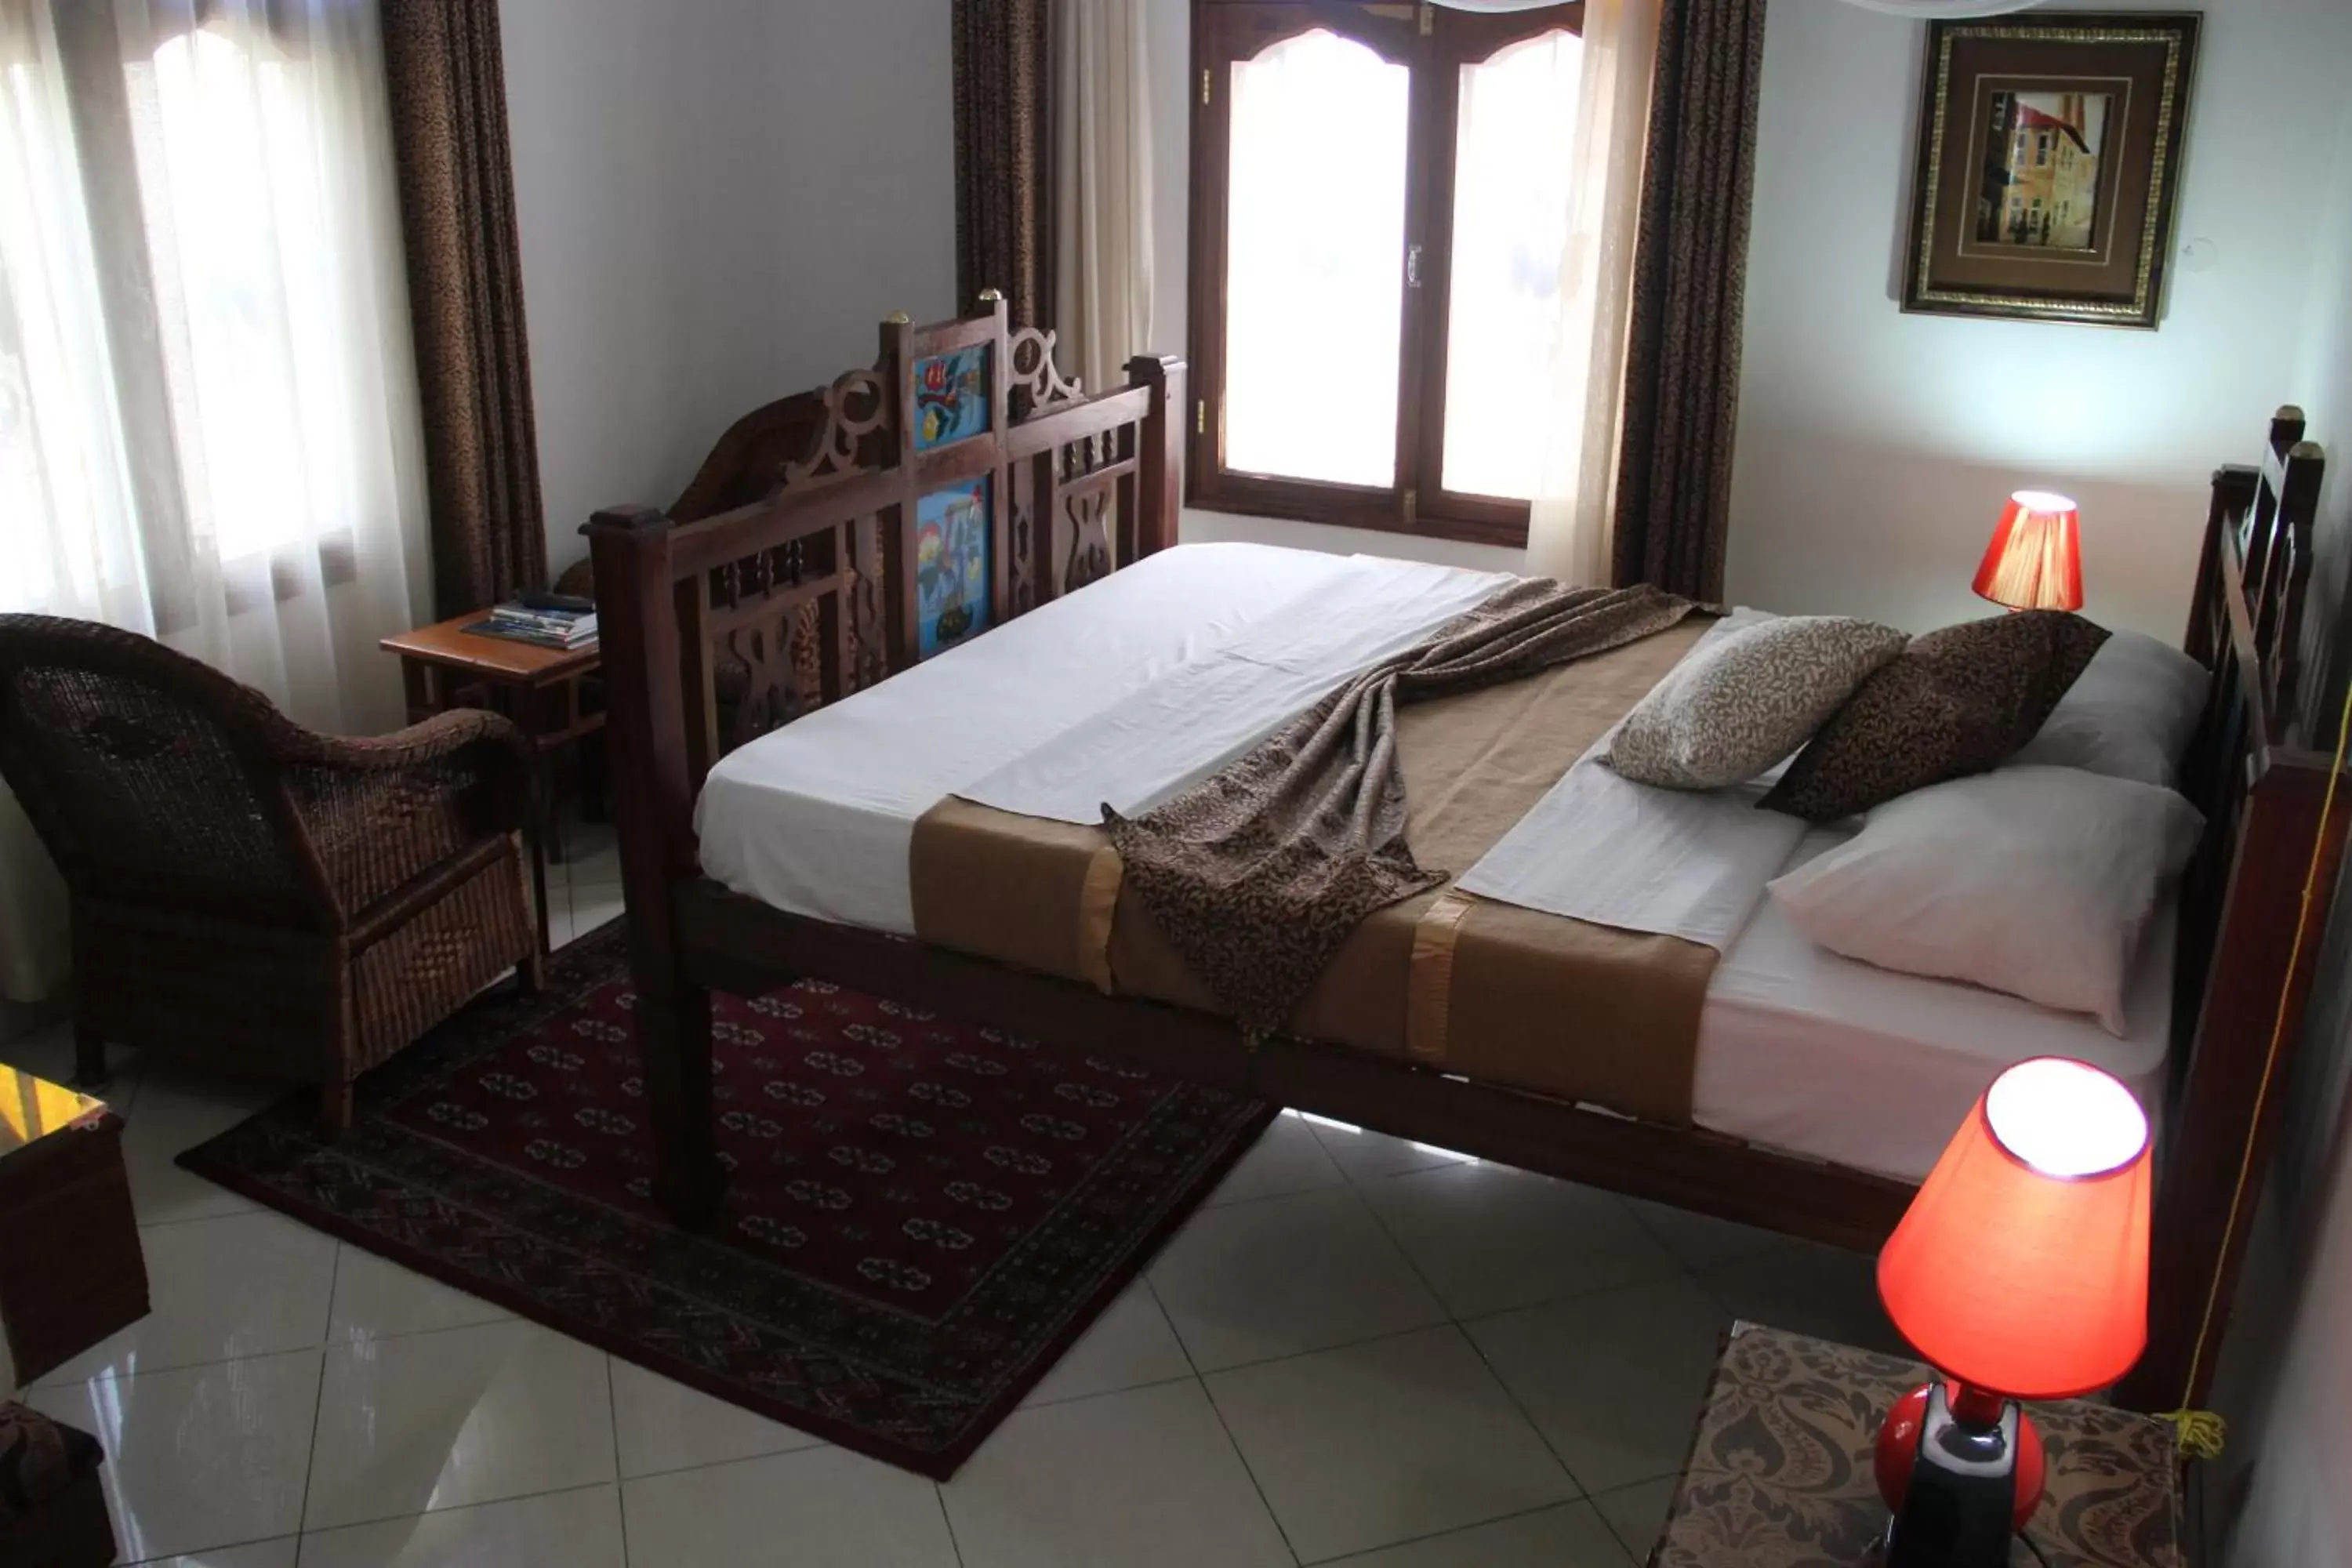 Bed, Room Photo in Al-Minar Hotel